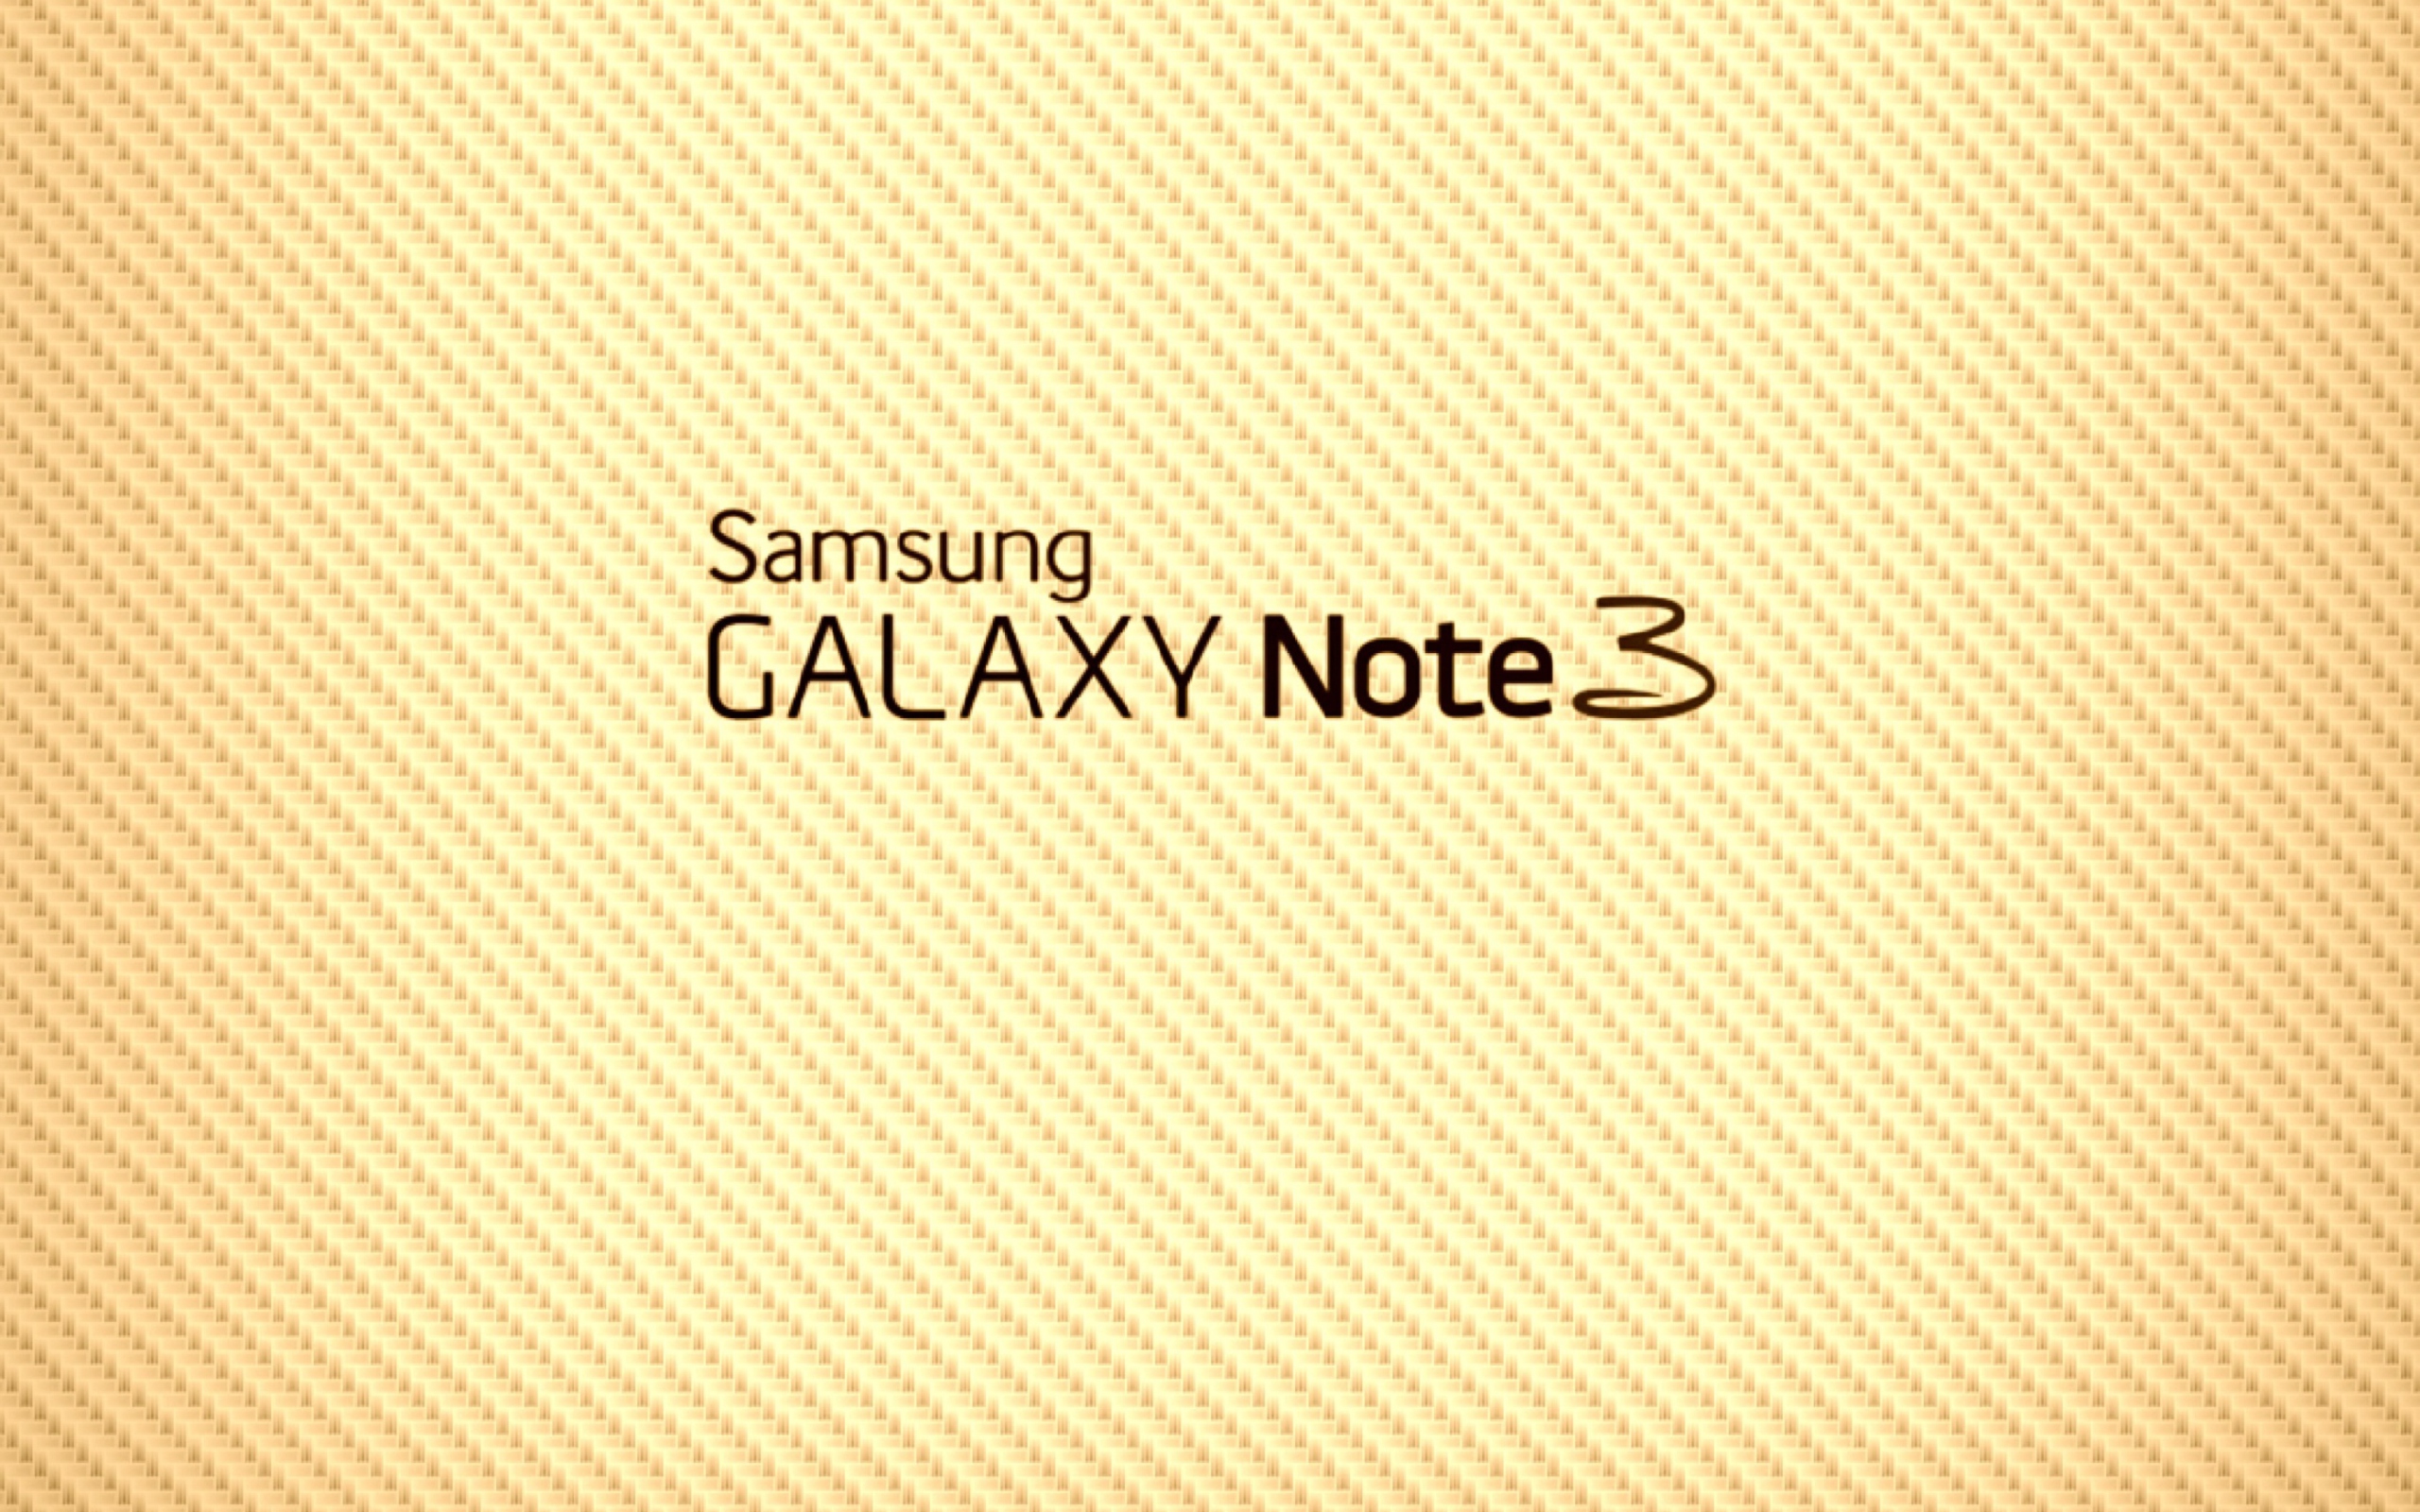 Sfondi Samsung Galaxy Note 3 Gold 2560x1600